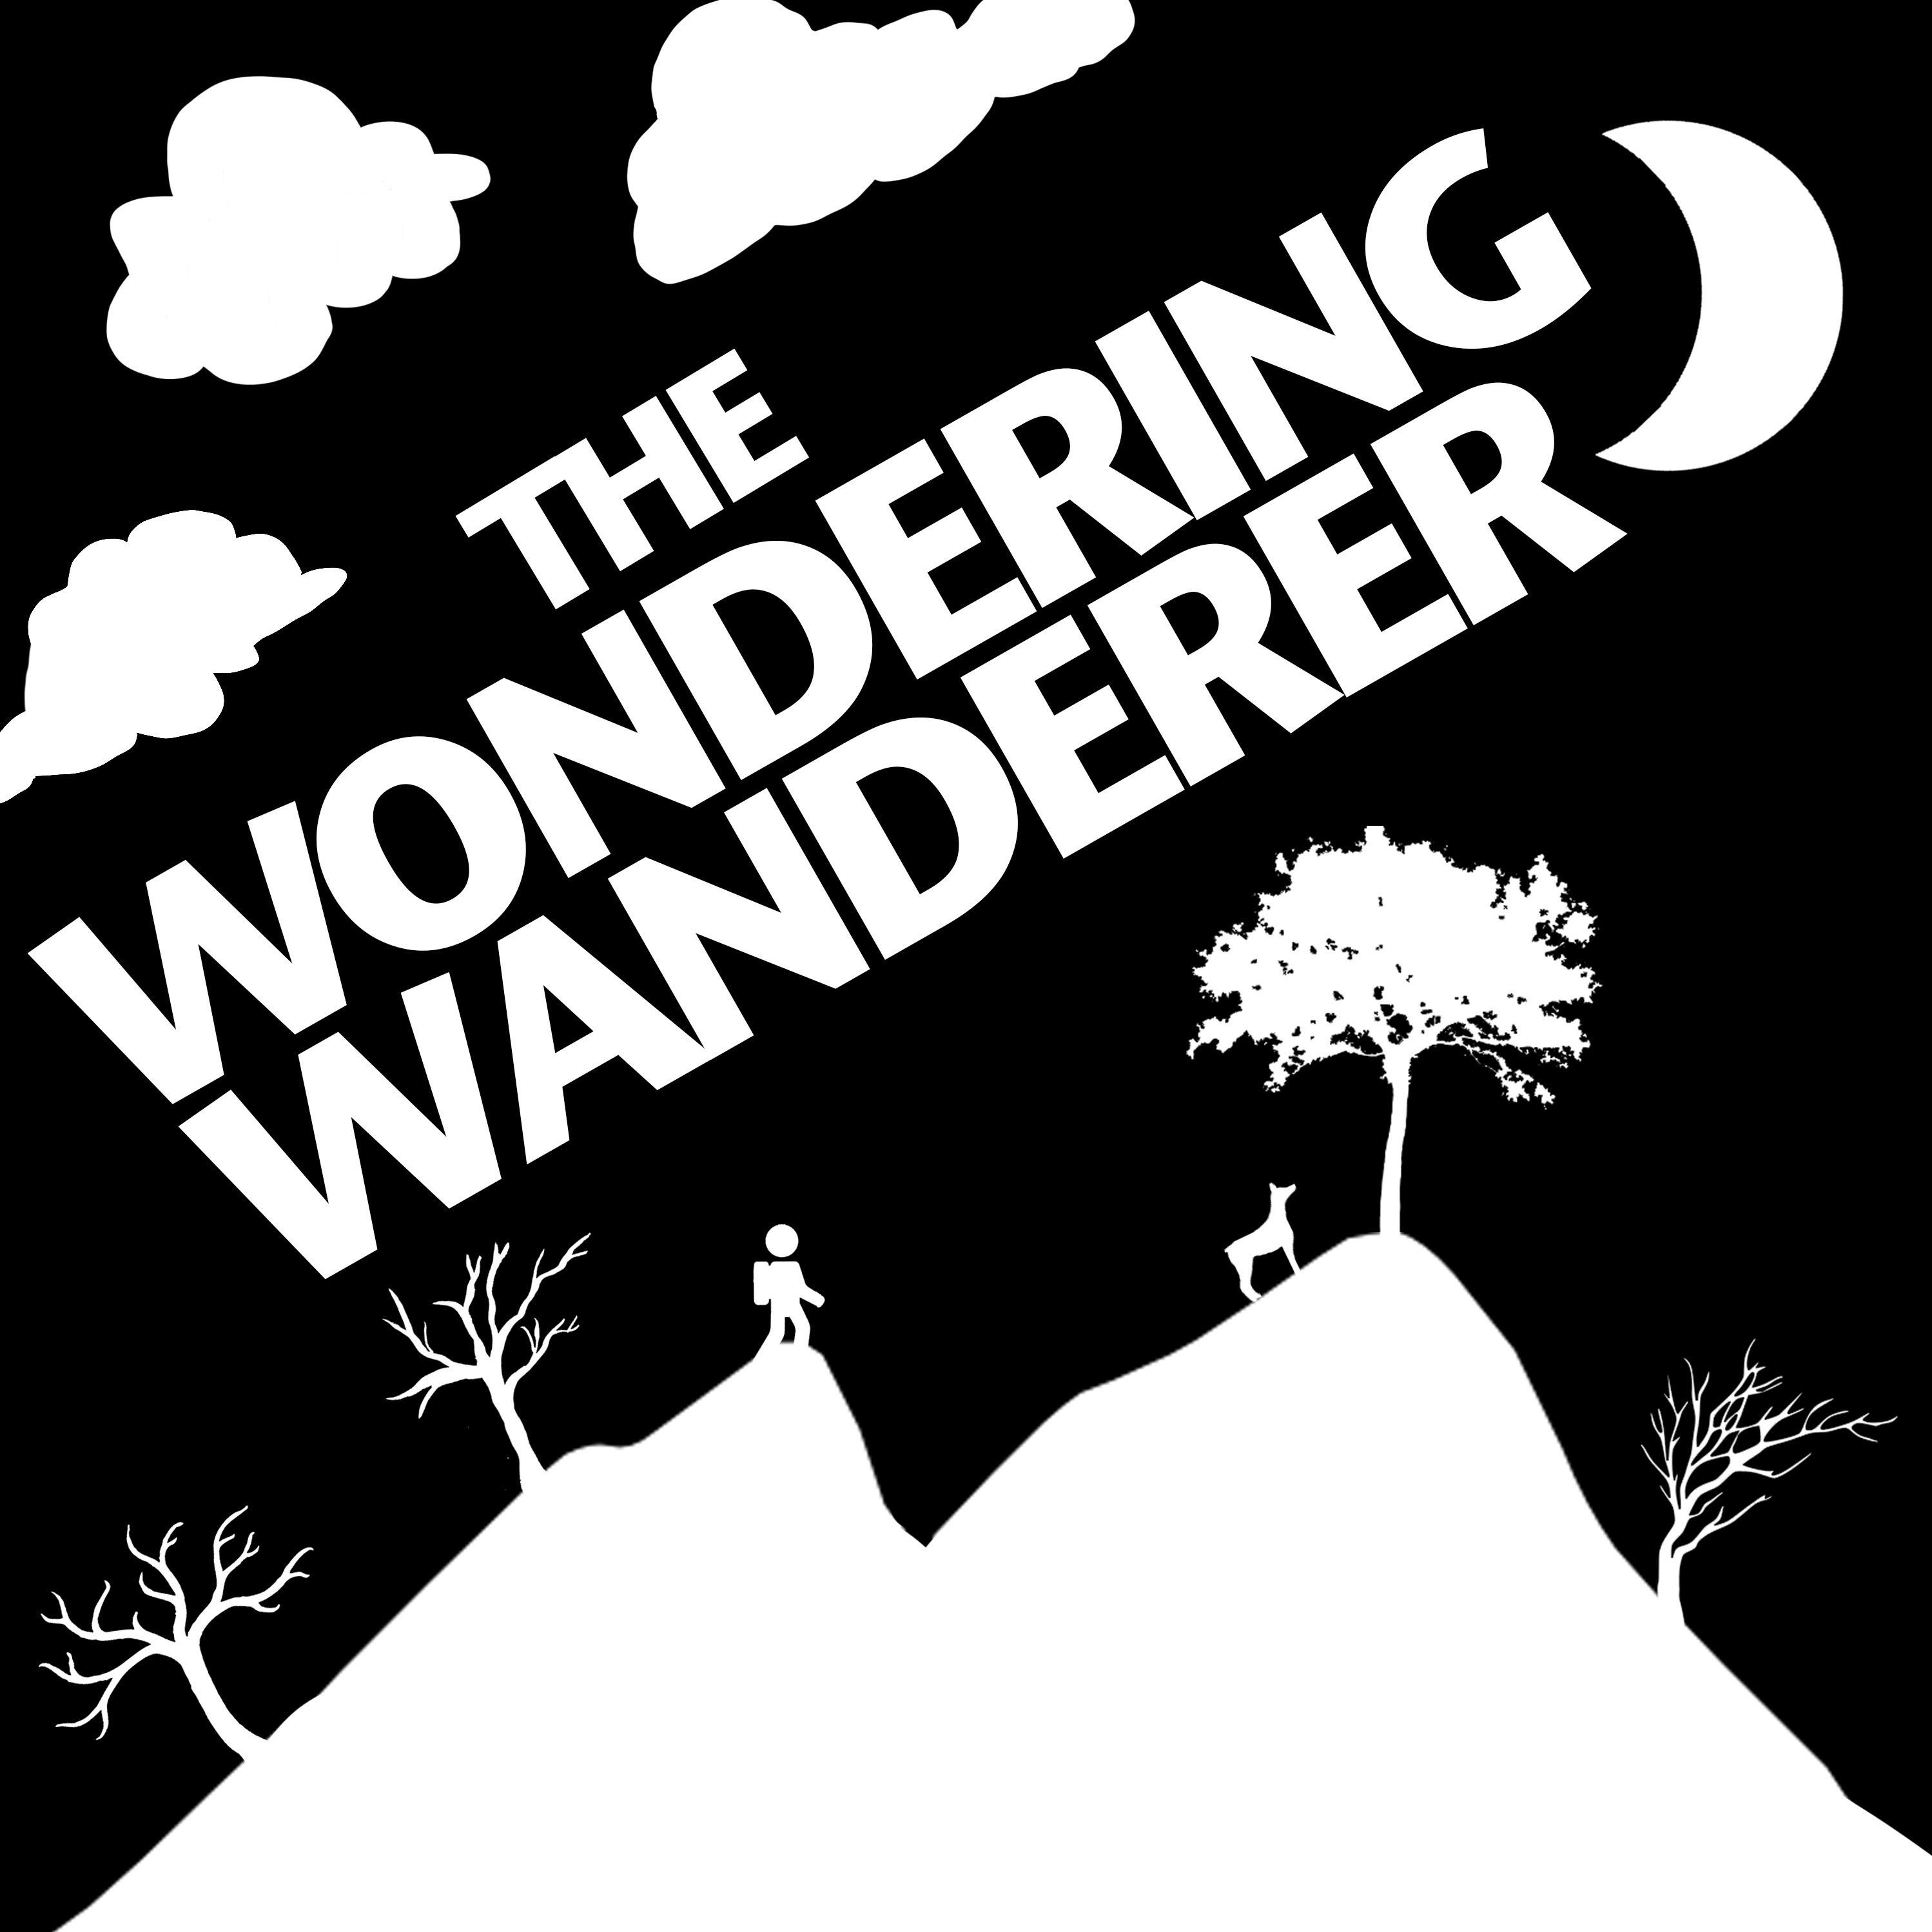 The Wondering Wanderer